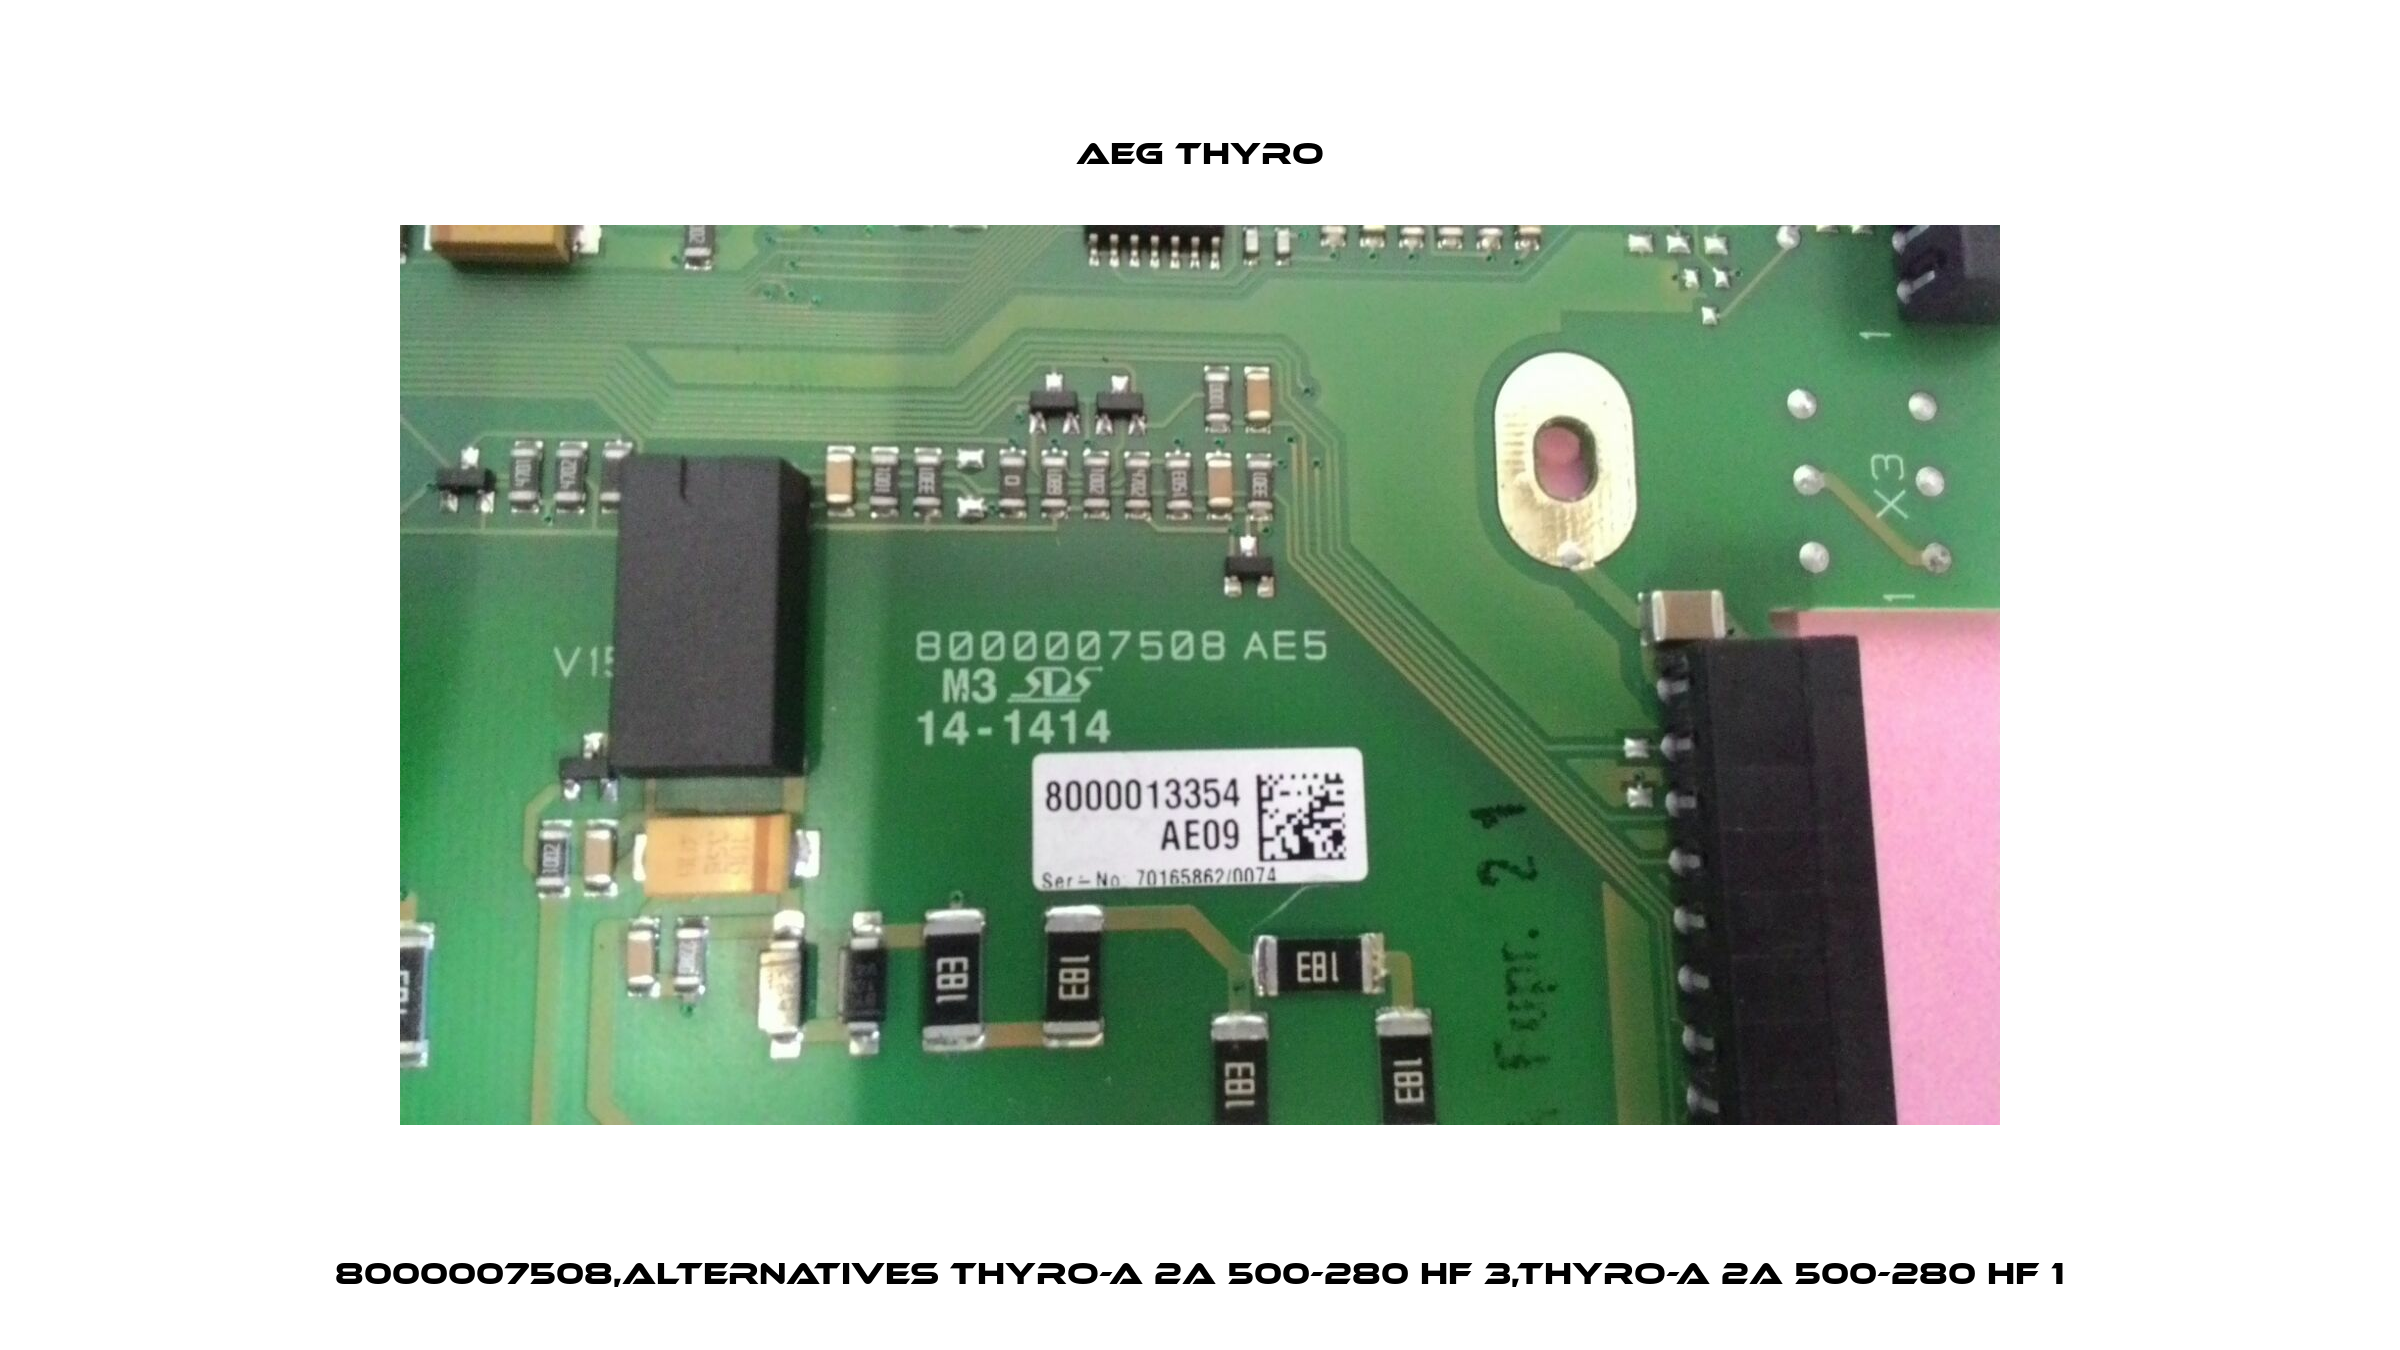 8000007508,alternatives Thyro-A 2A 500-280 HF 3,Thyro-A 2A 500-280 HF 1 AEG THYRO